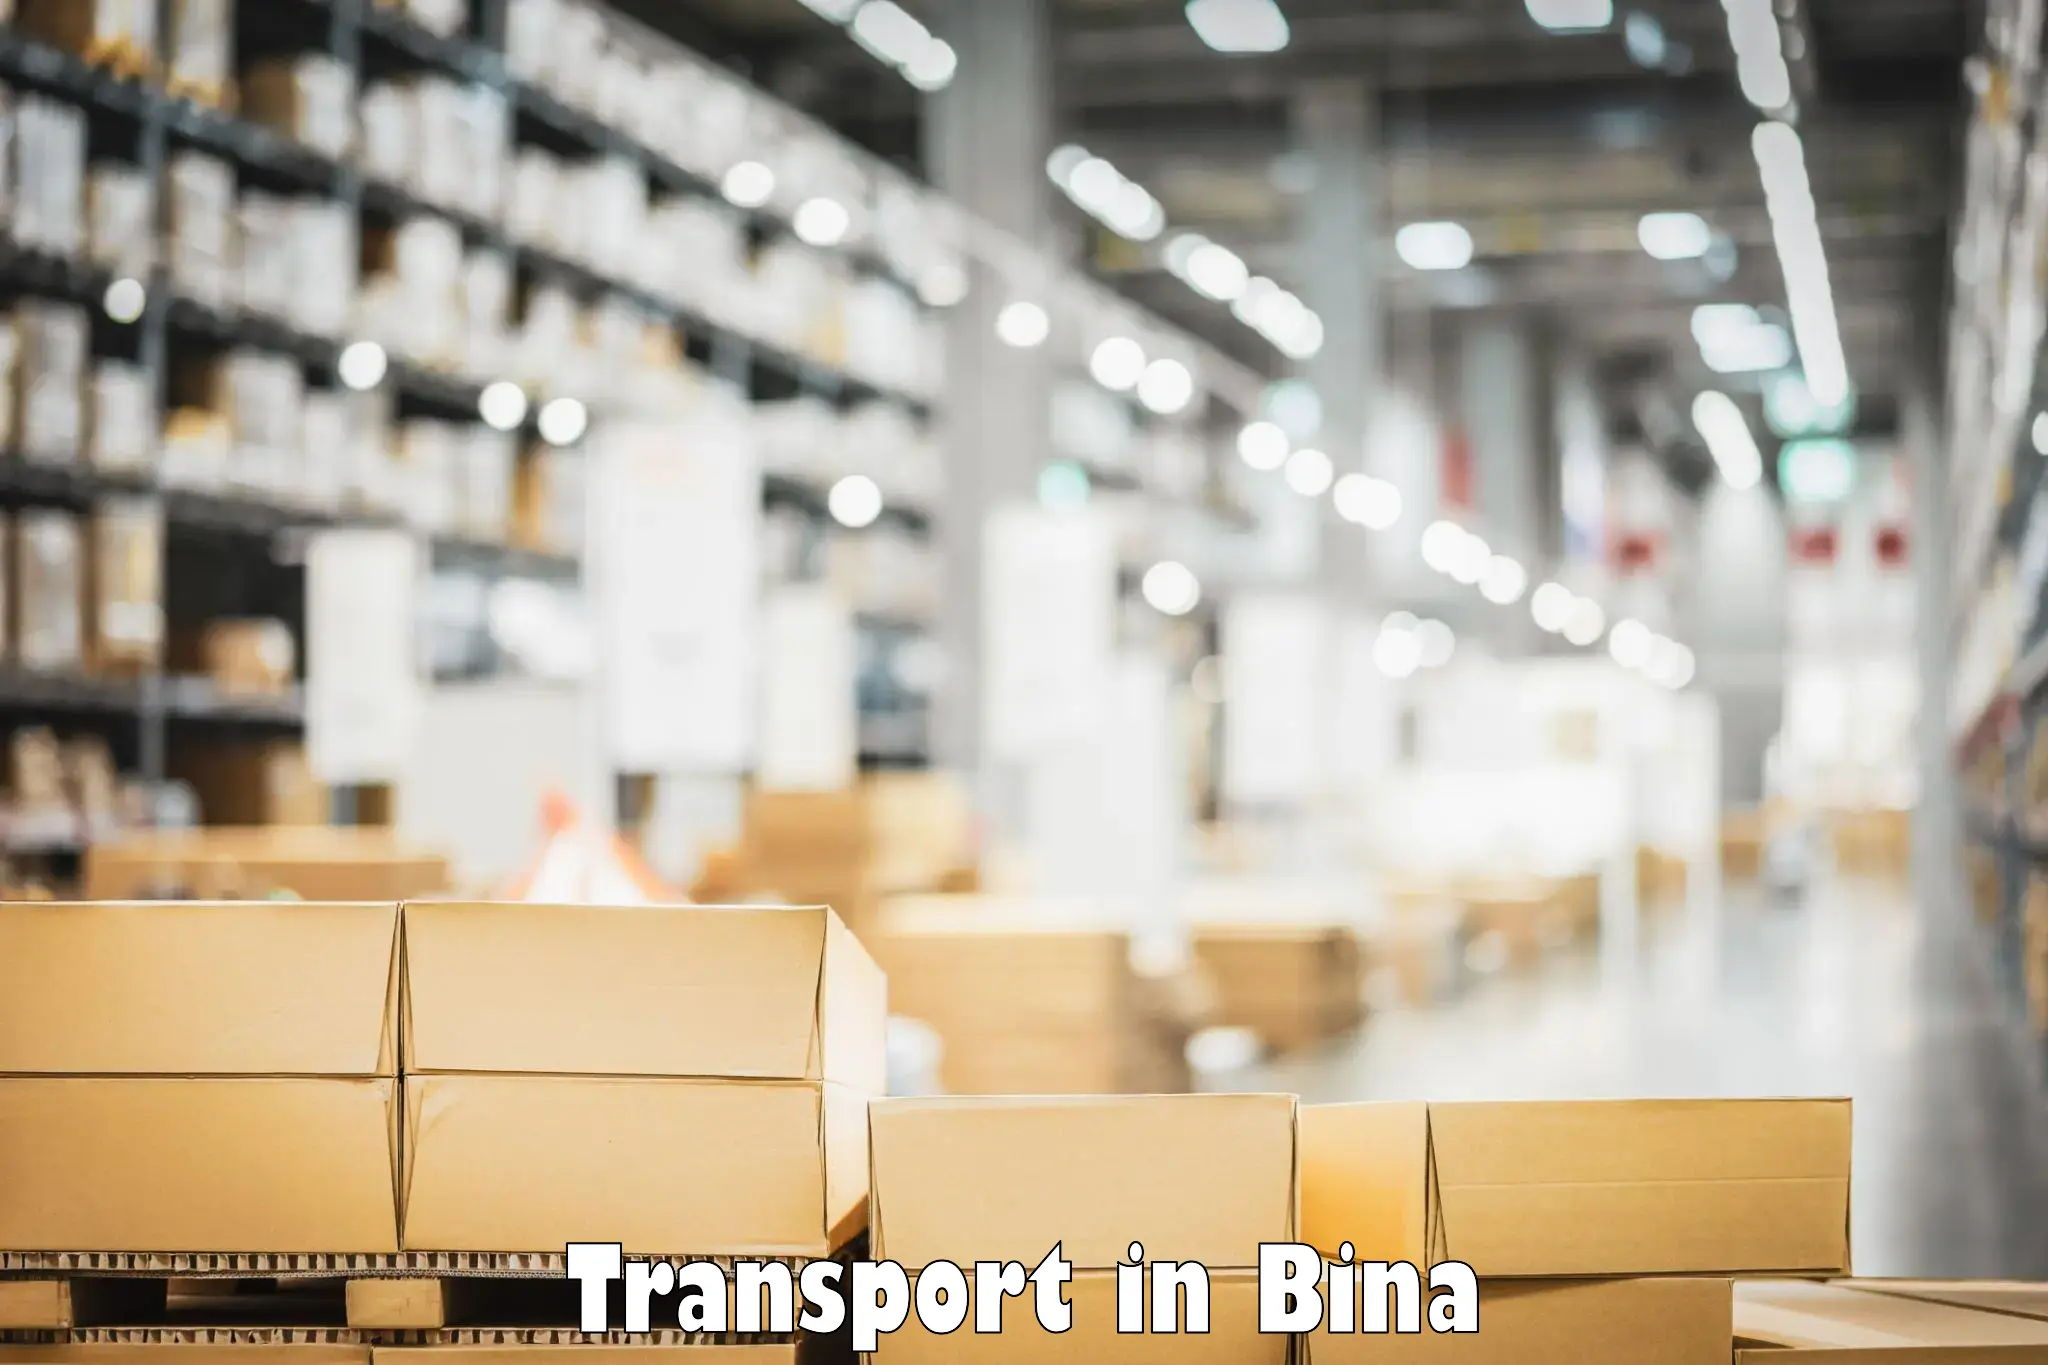 Nearest transport service in Bina